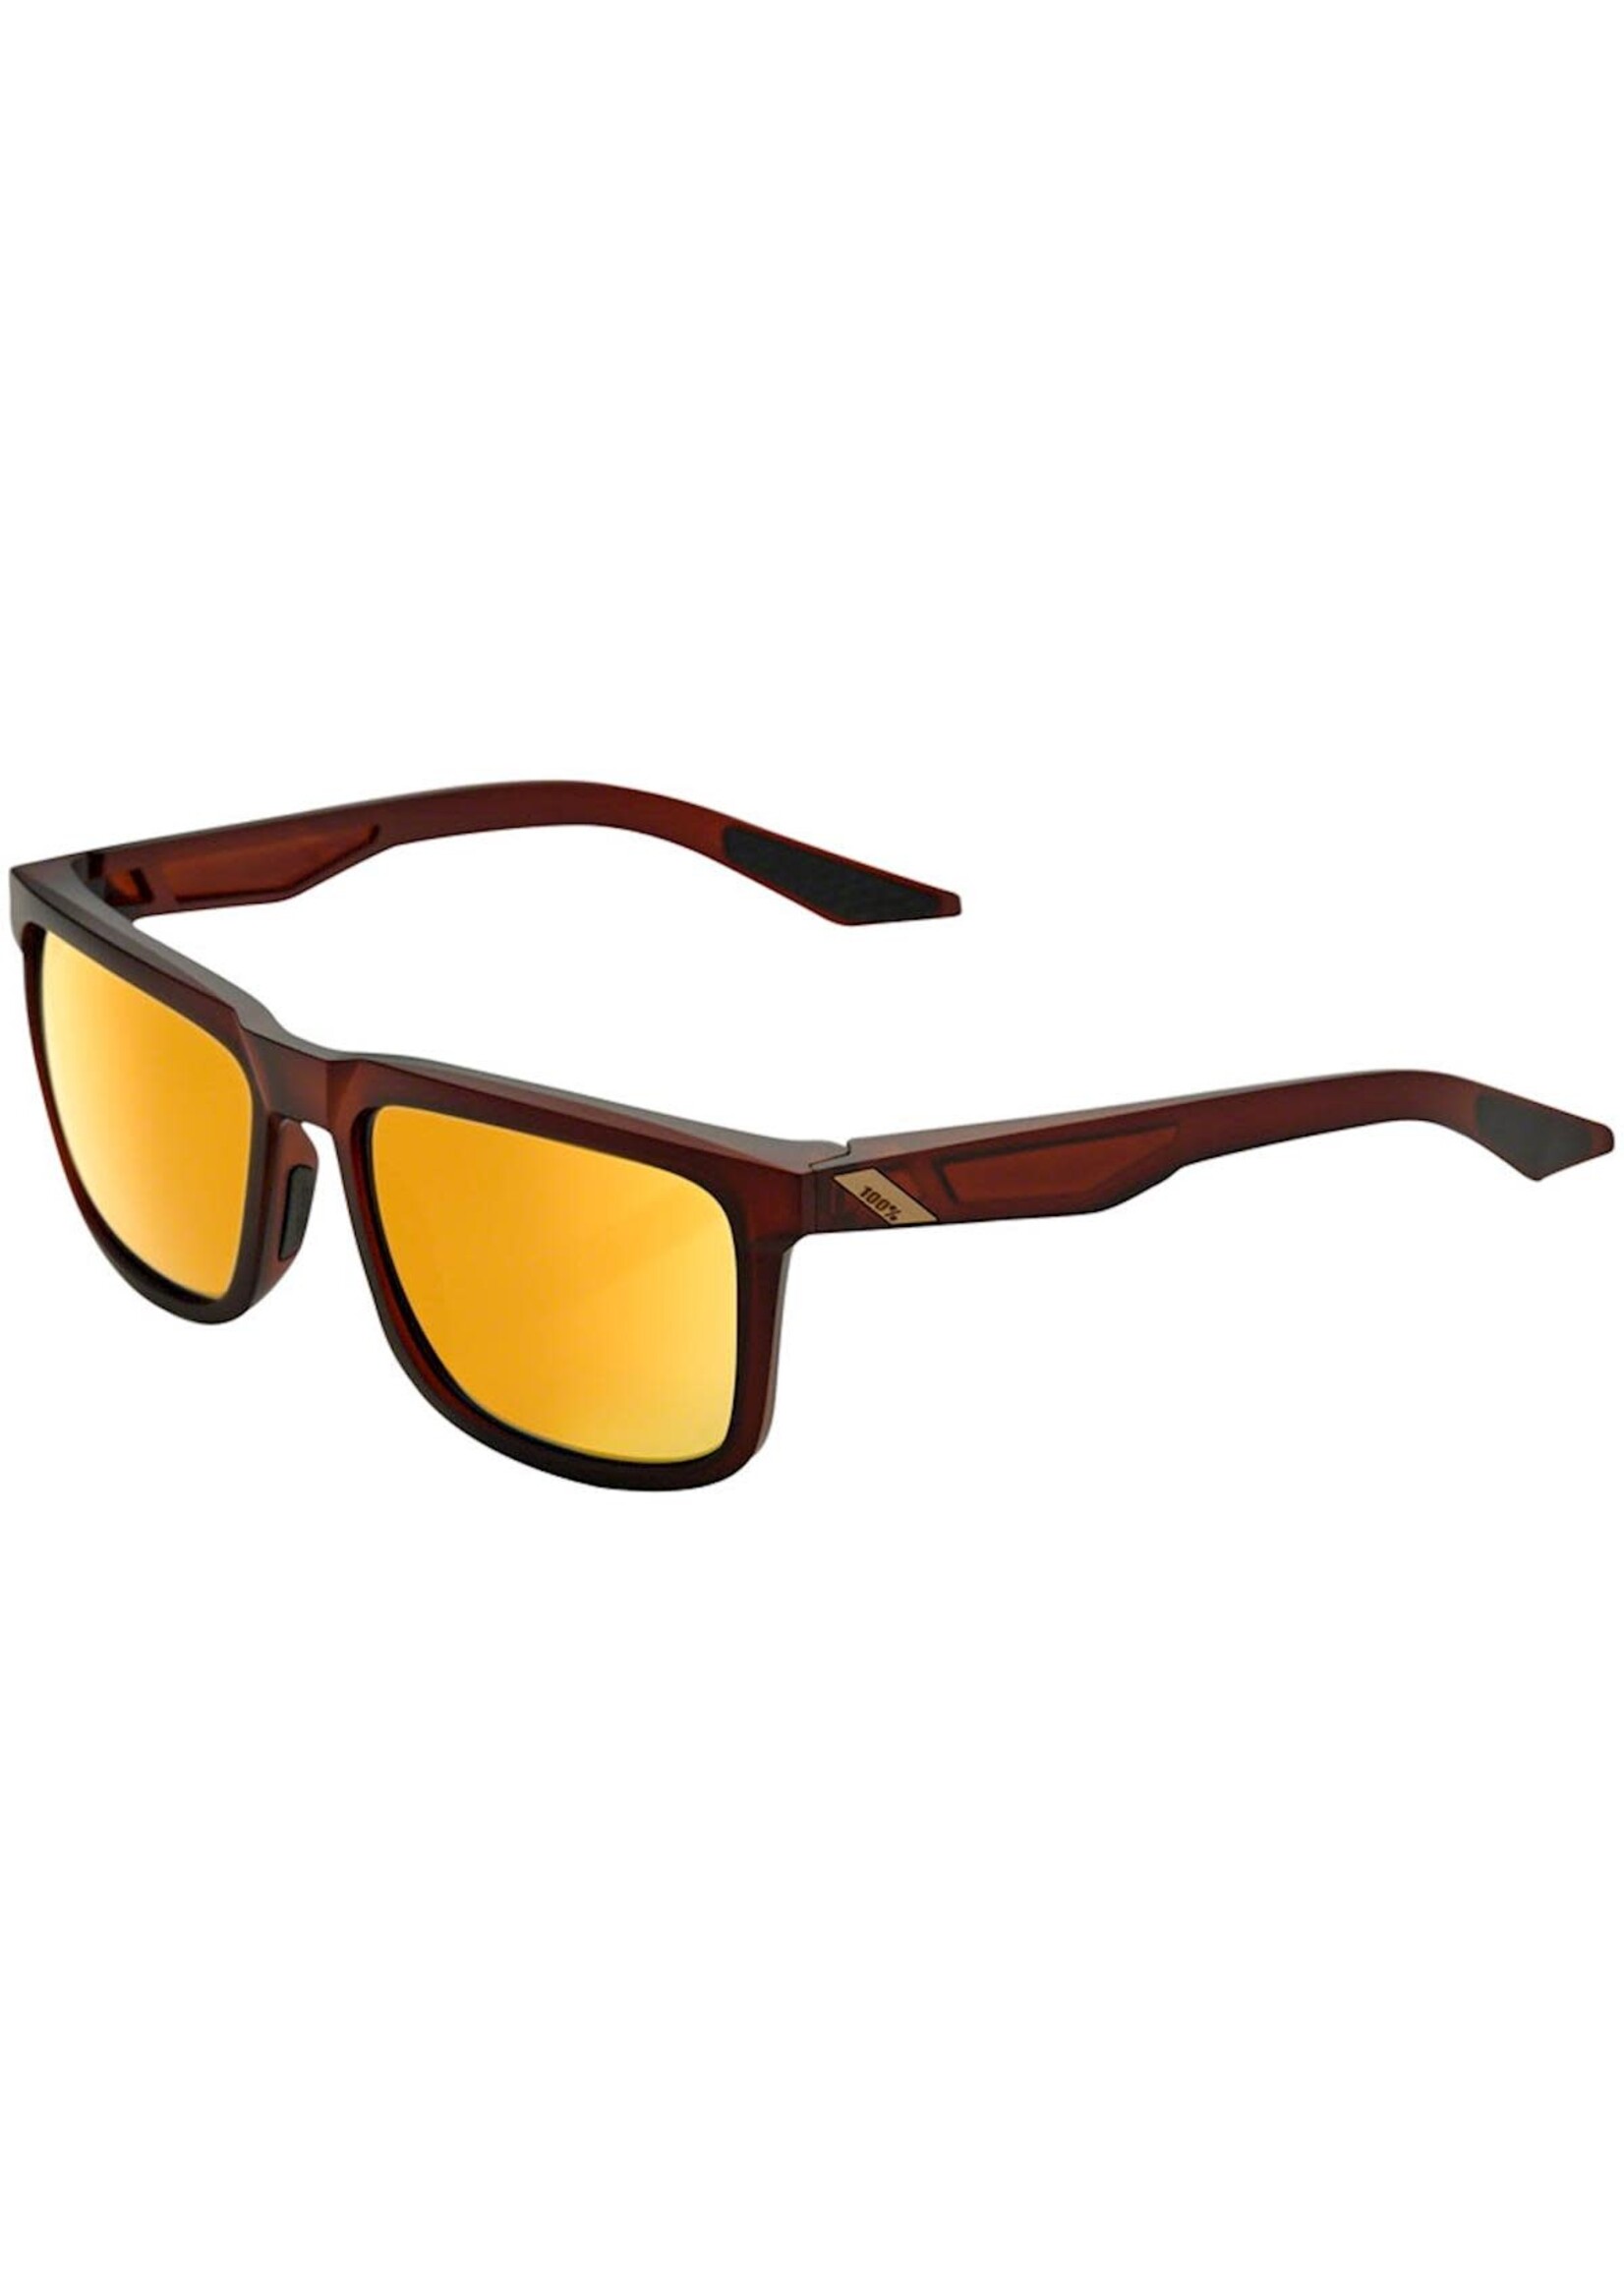 100 Percent 100% Blake Sunglasses (Soft Tact Rootbeer) (Flash Gold Lens)